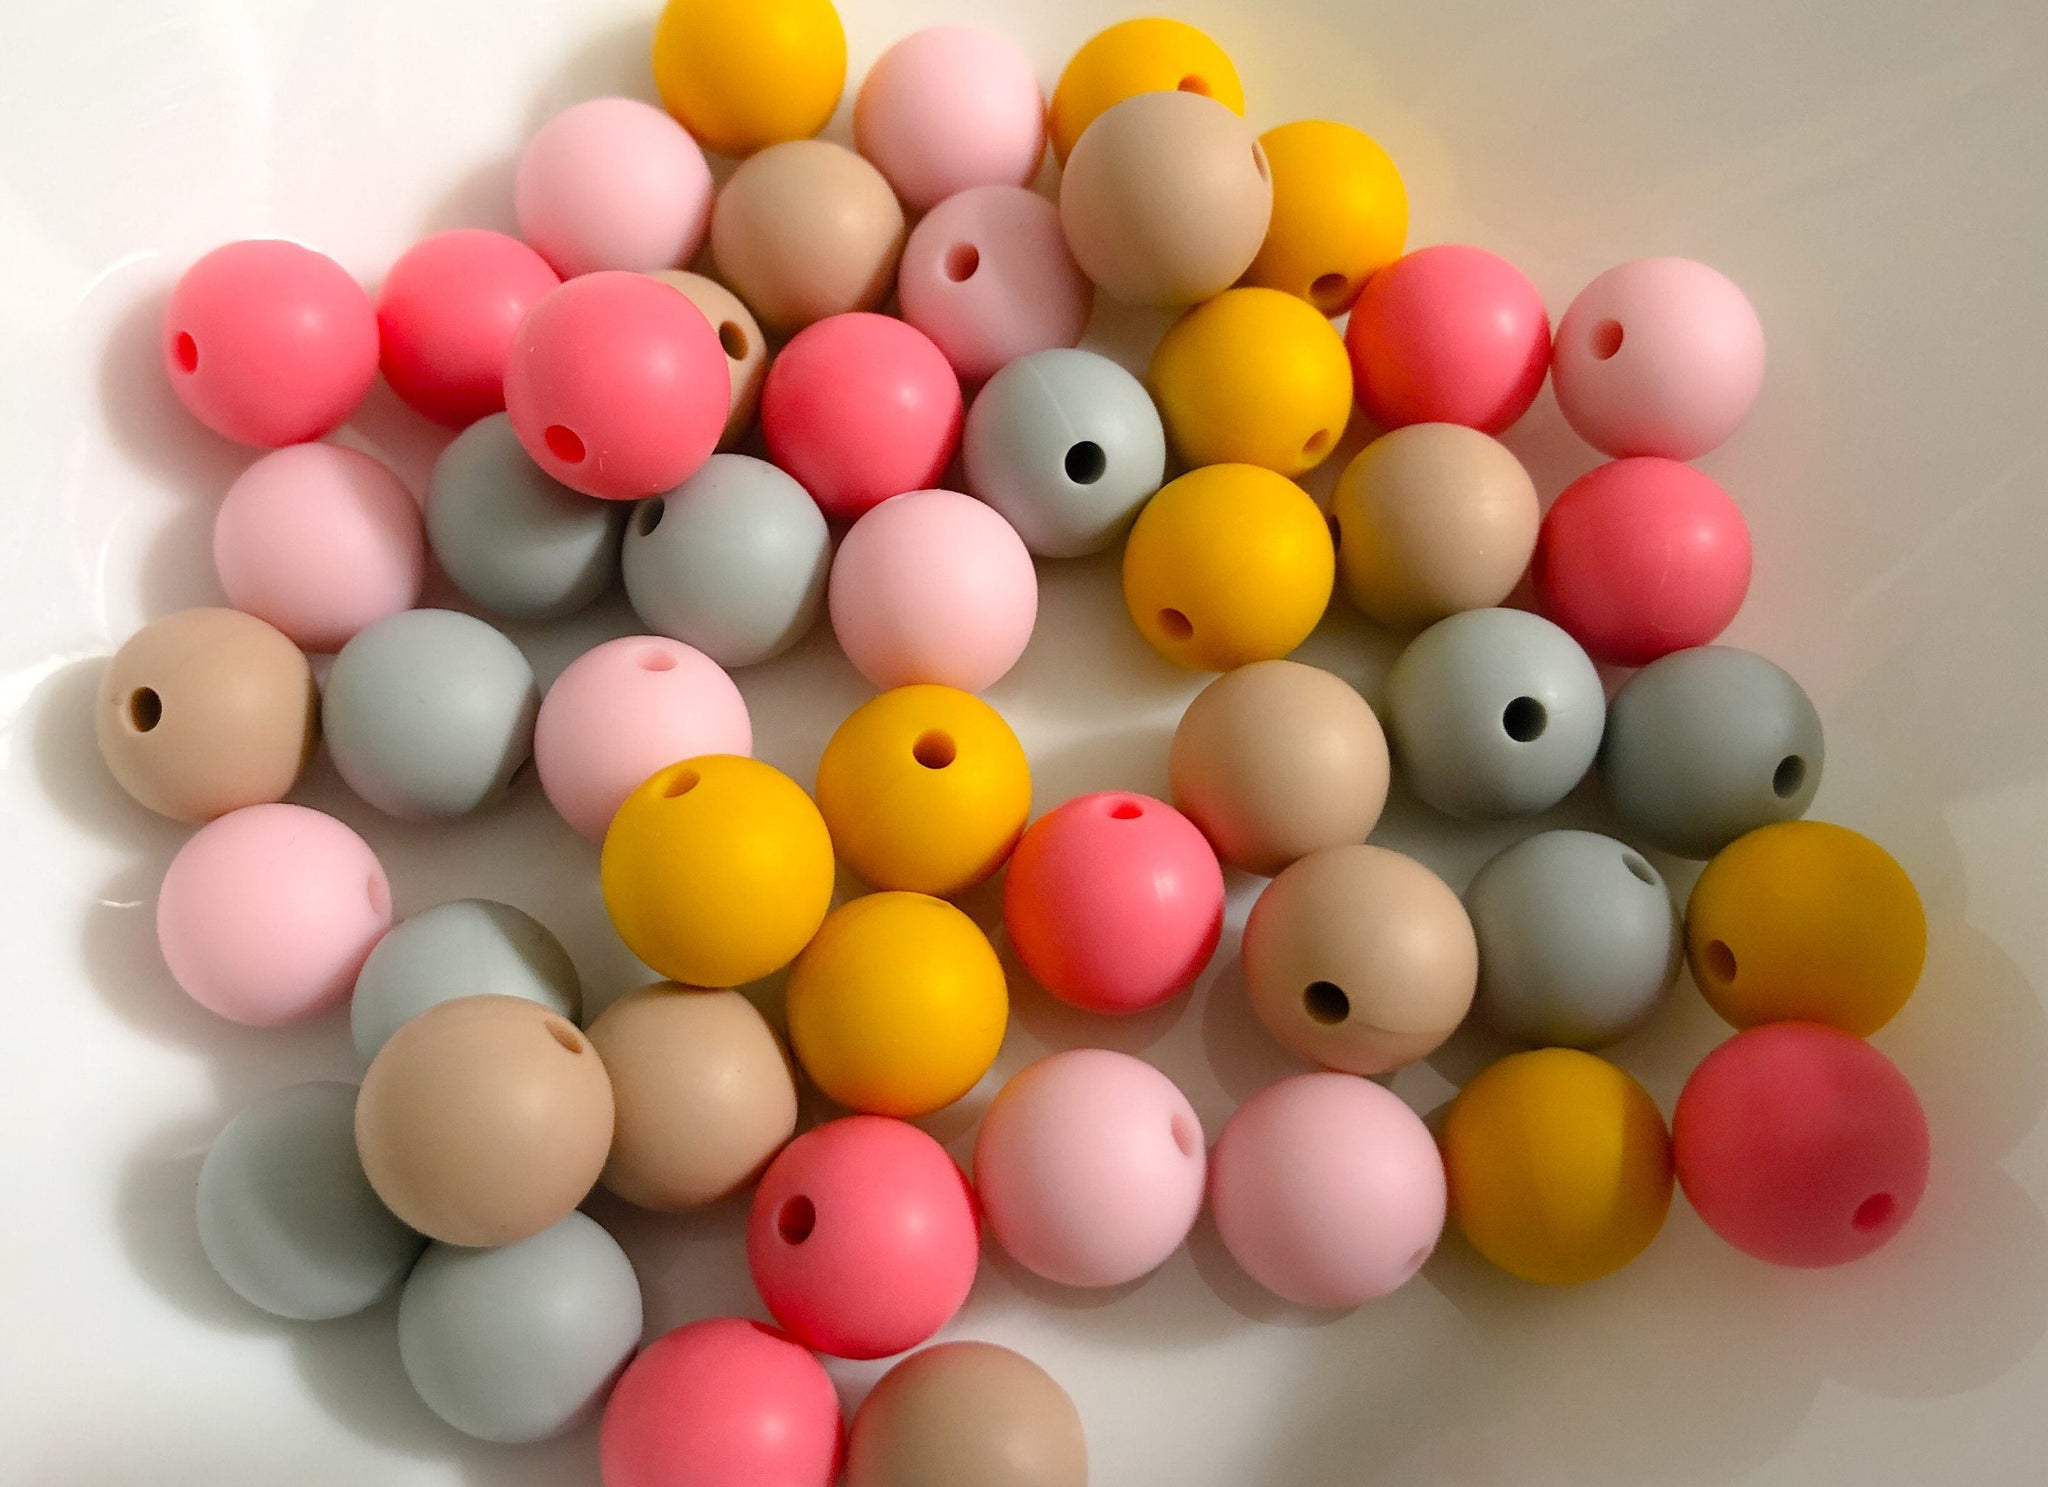 50 Bulk Silicone Beads - Cherry Blossom - Salmon, Quartz, Oatmeal, Dove, Pencil